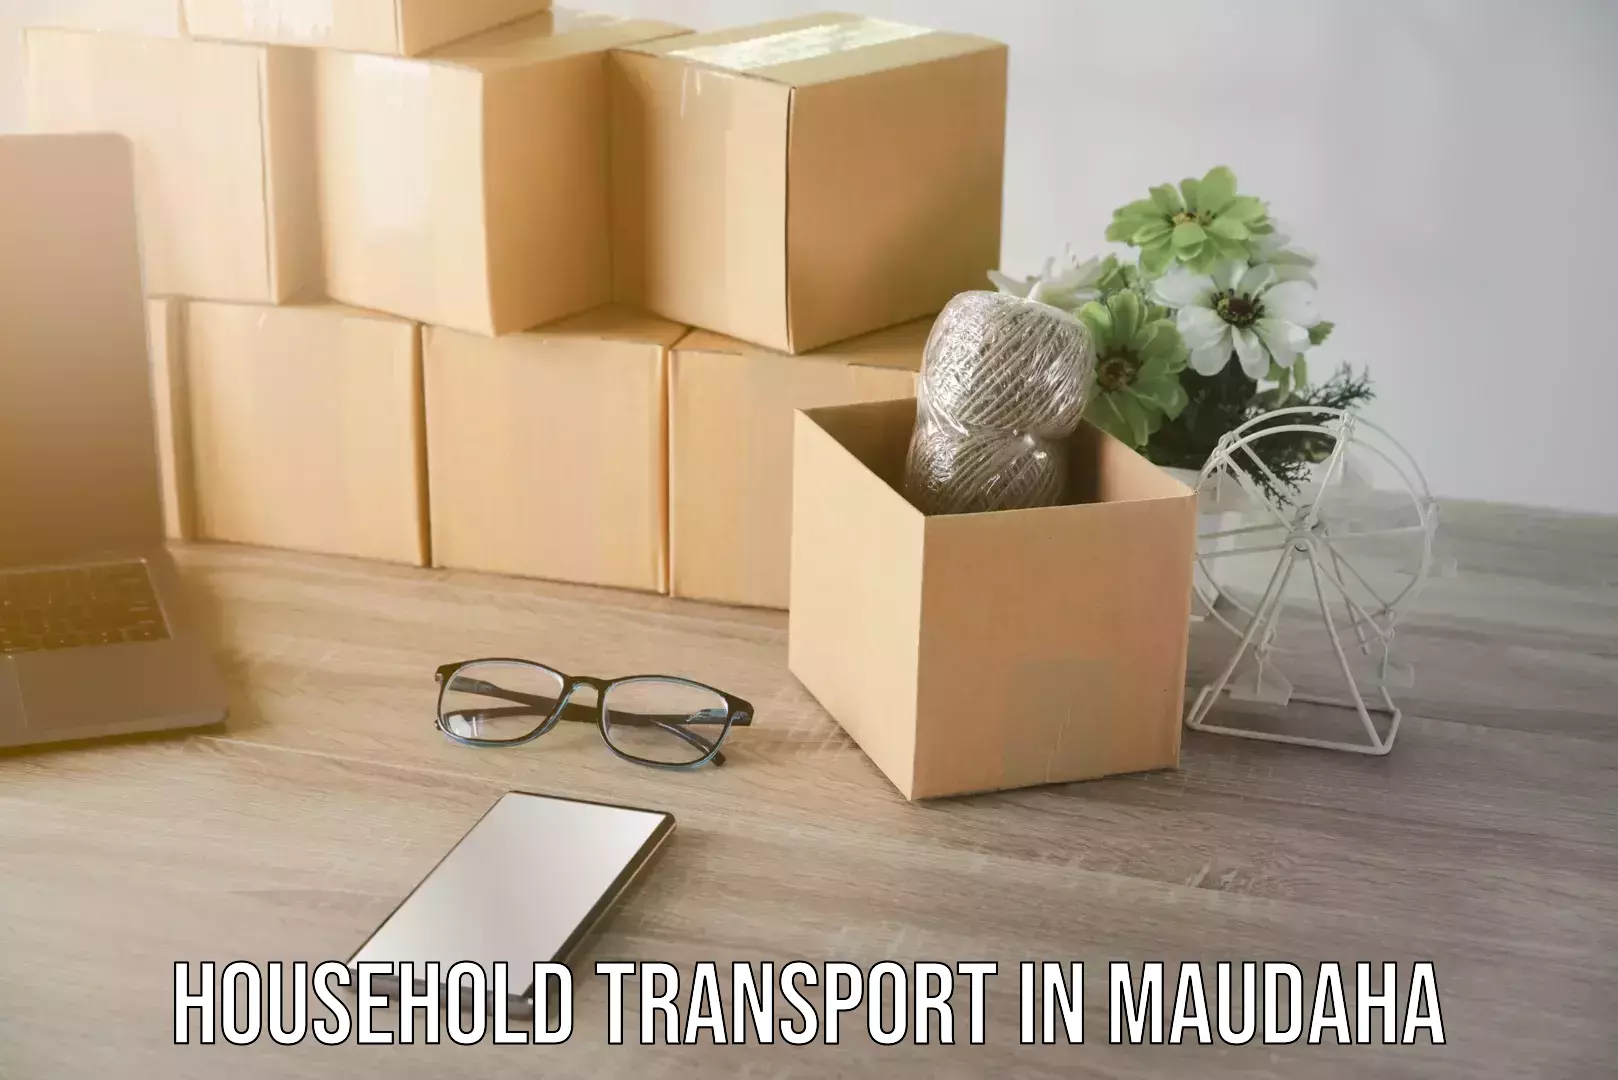 Full-service furniture transport in Maudaha